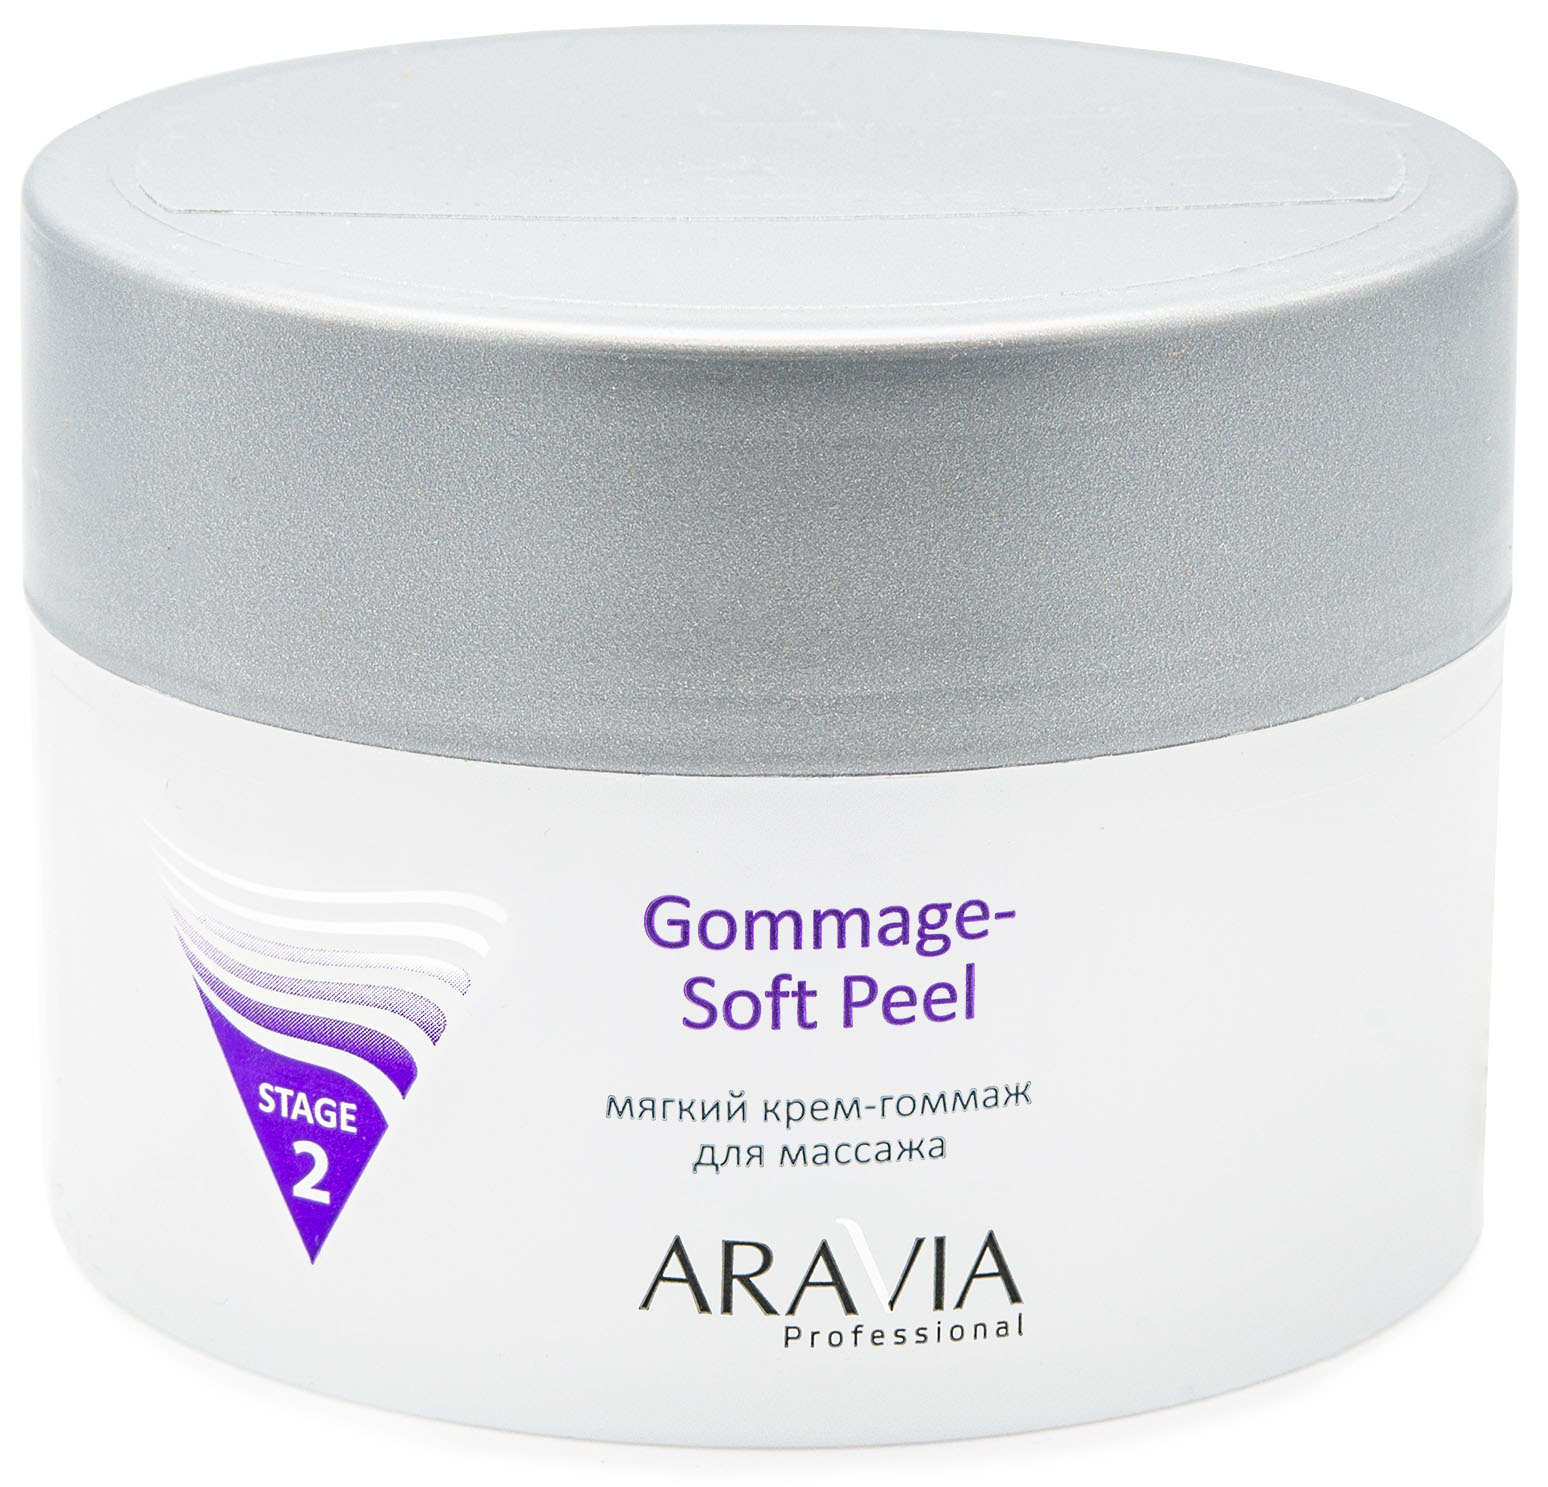 Aravia Professional Мягкий крем-гоммаж для массажа Gommage -